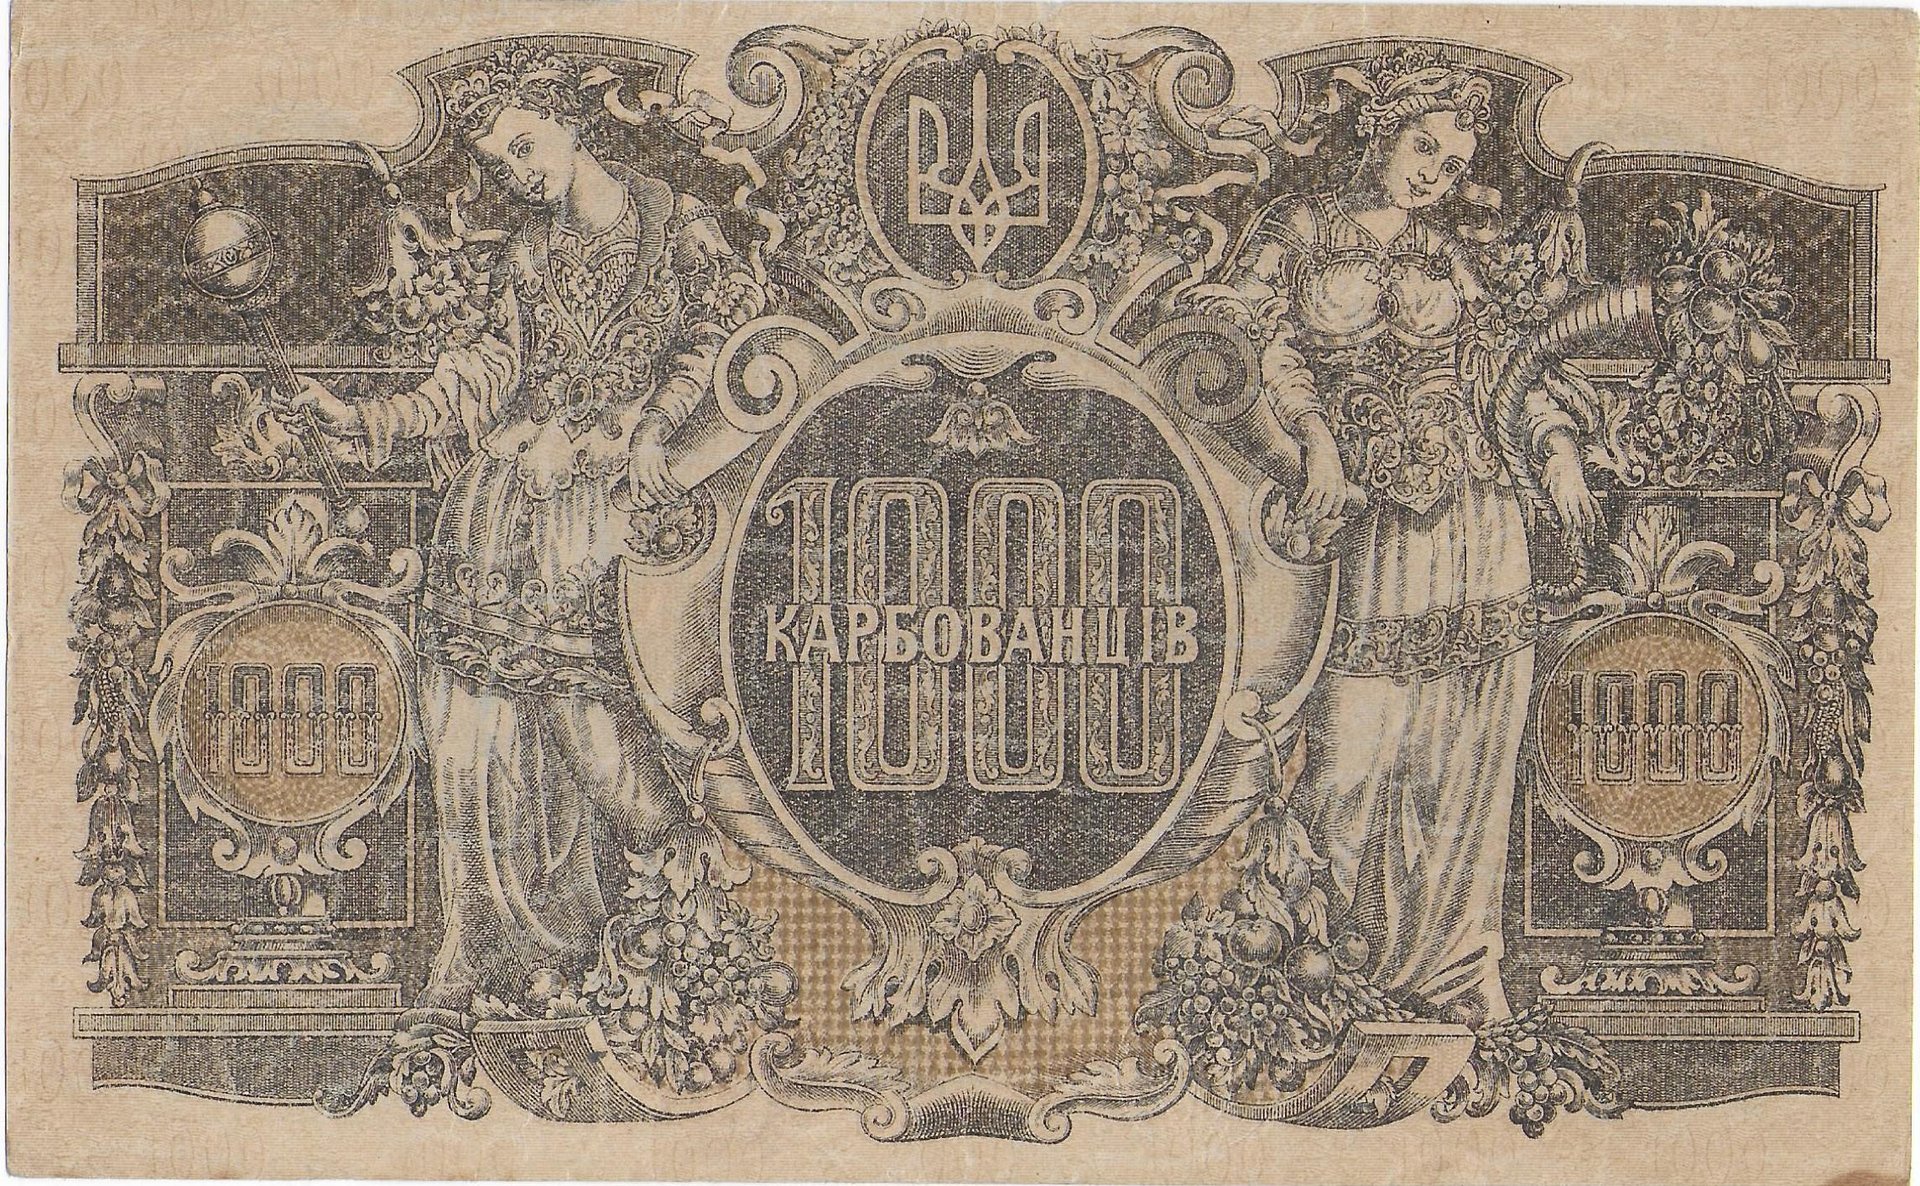 Ukraine State Treasury Note 1000 Karbovantsiv 1918 back.jpg